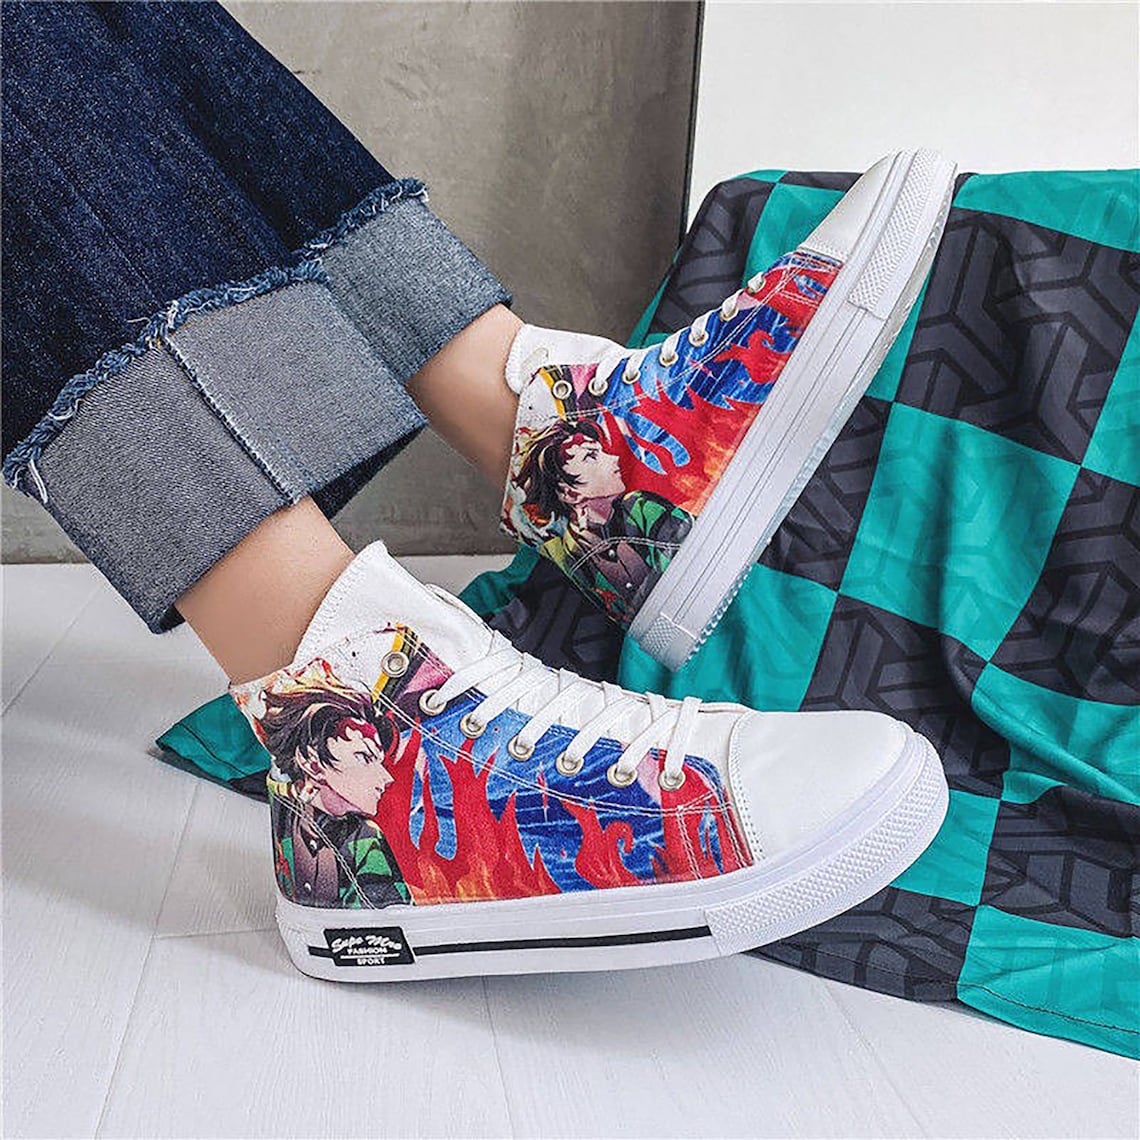 Anime Custom Shoes Japan Anime Custom Sneakers Anime | Etsy